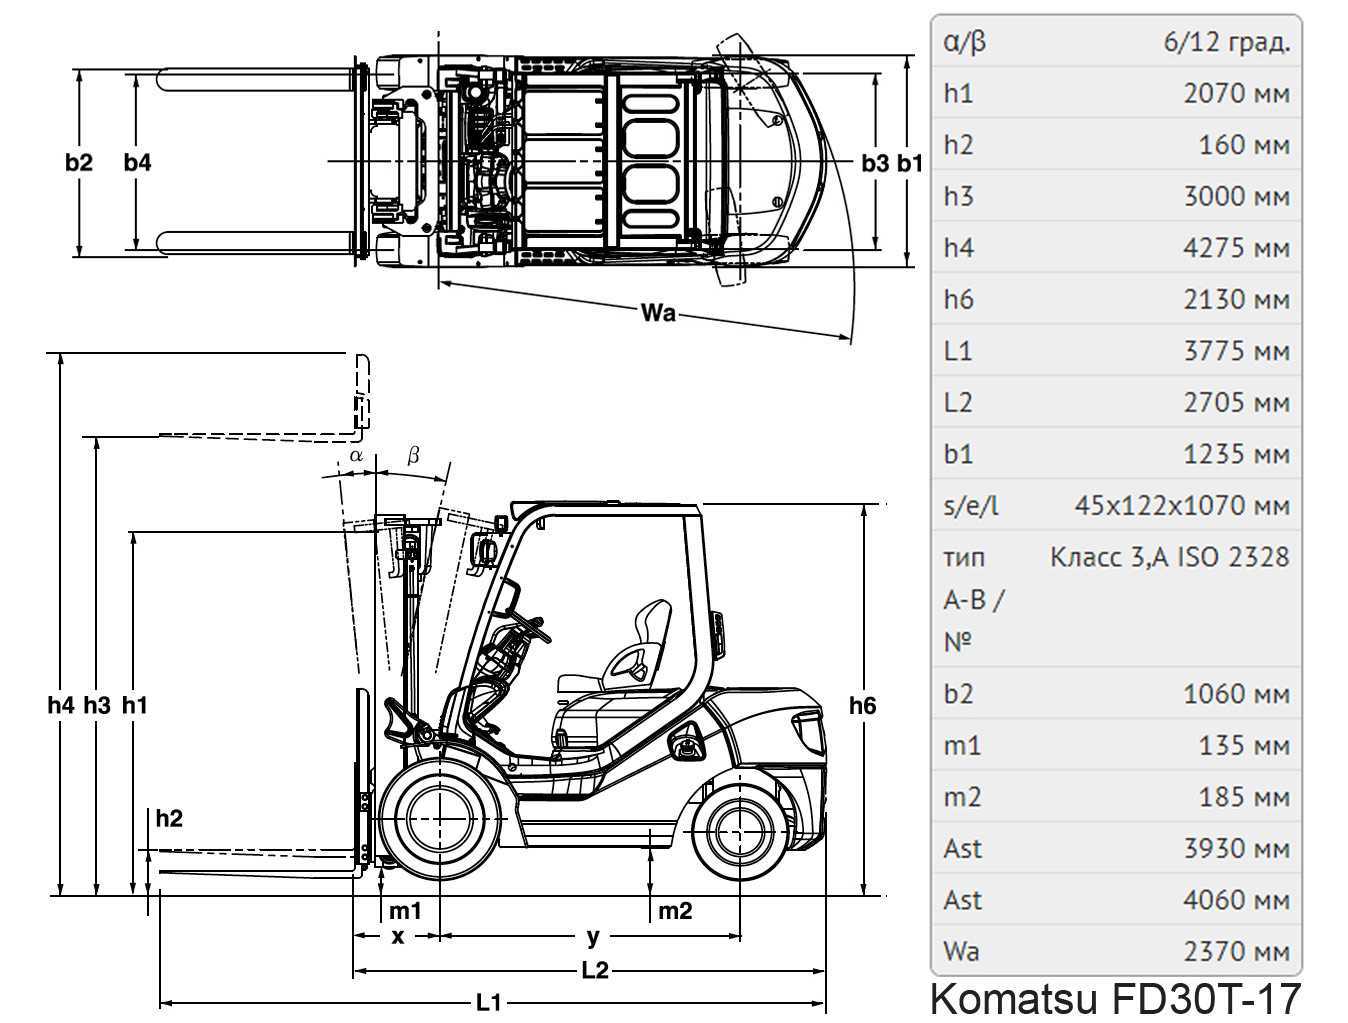 Komatsu wb97s: технические характеристики